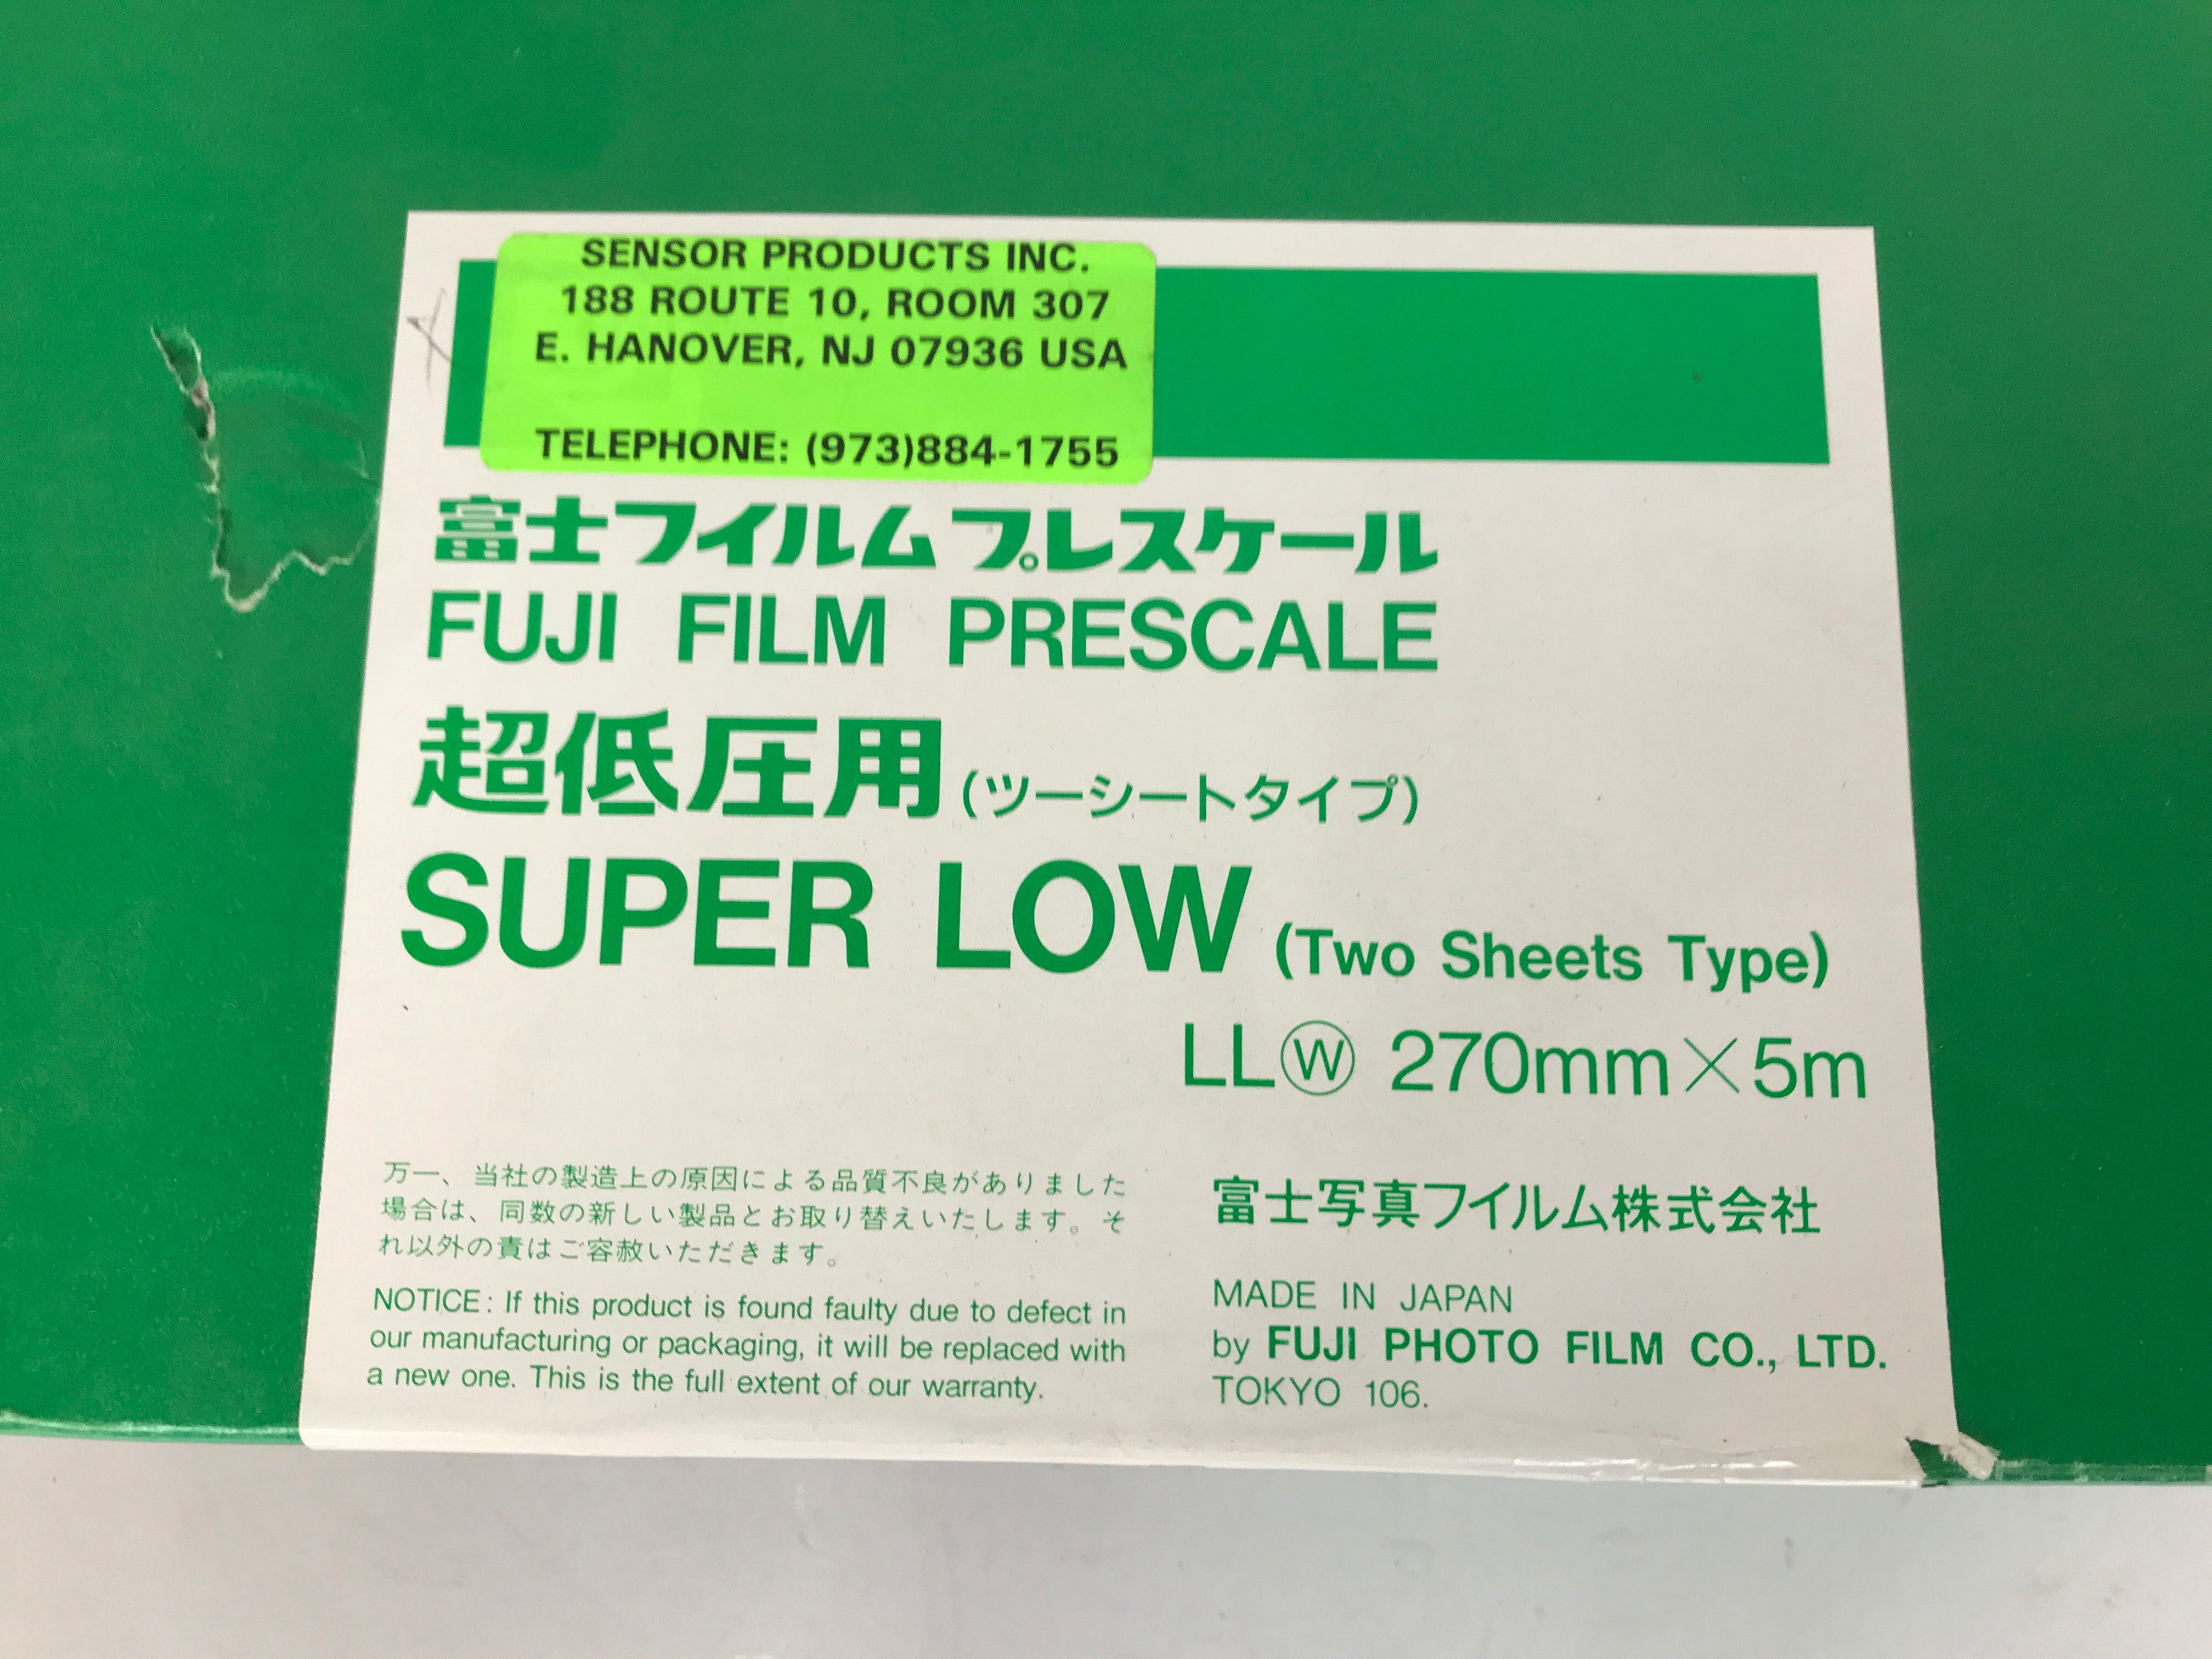 Expired Fuji Film Prescale Super Low LLW 270mm x 5m #2